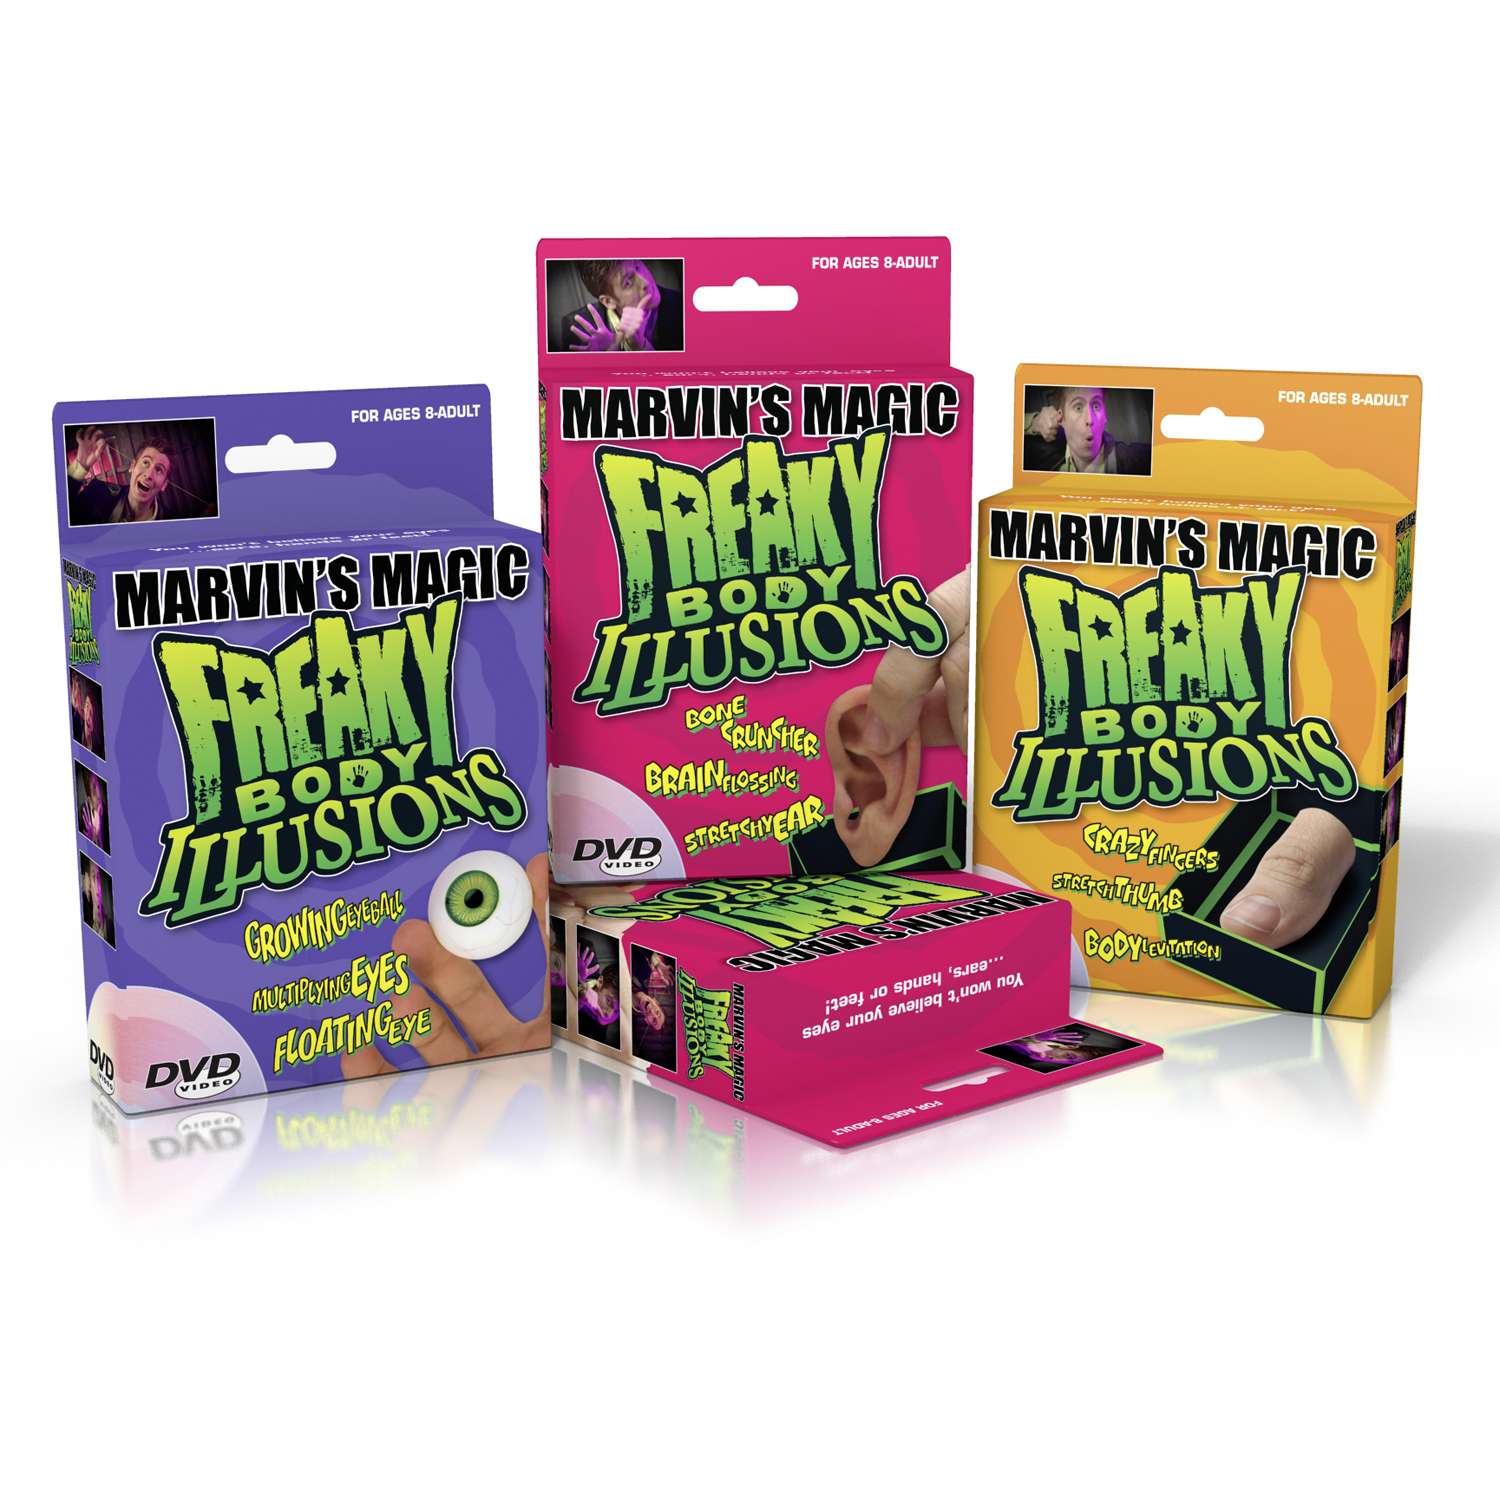 Набор Marvins Magic Freaky Body 3 - фото 2